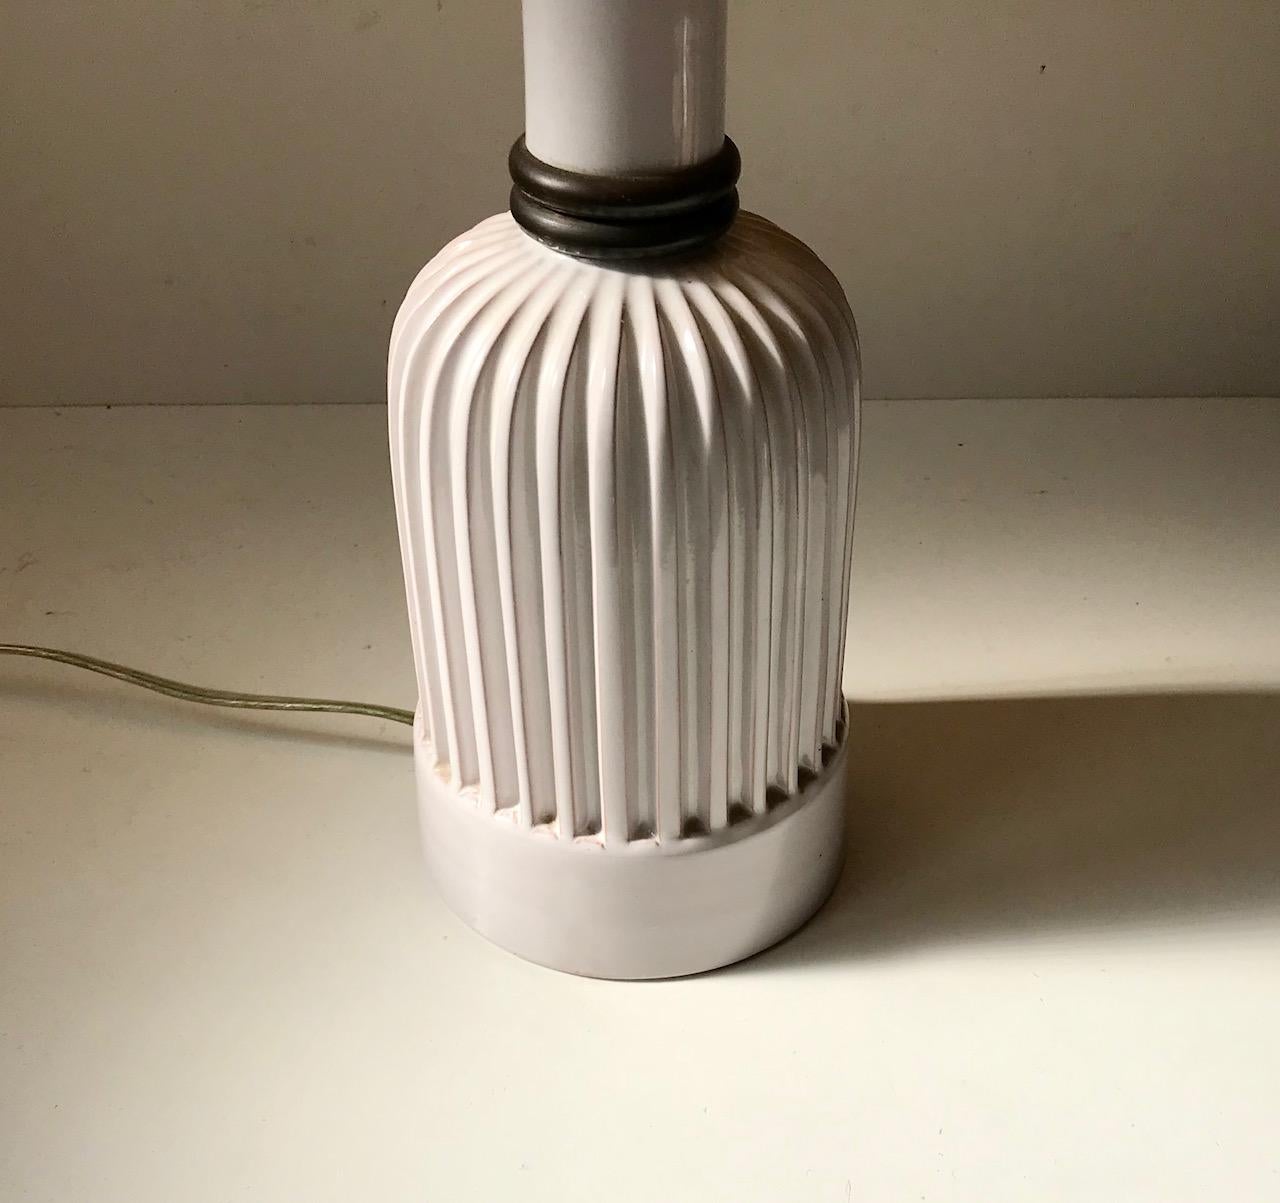 Danish Art Deco Table Lamp in White Glazed Ceramic by Christian Schollert, 1940s For Sale 1